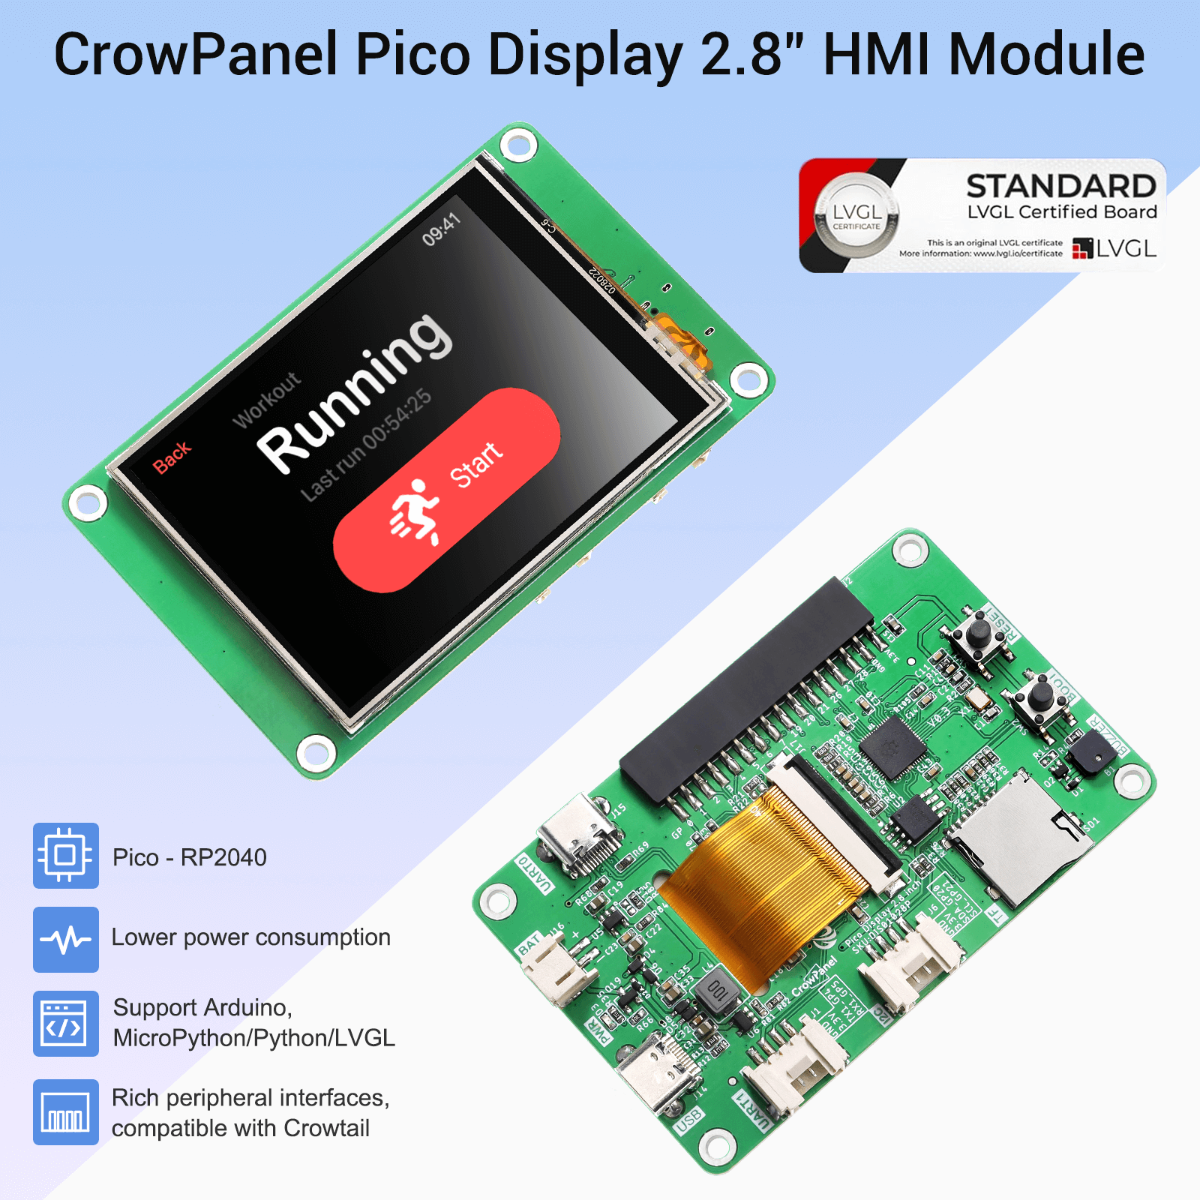 Pico 2.8 inch HMI module feature